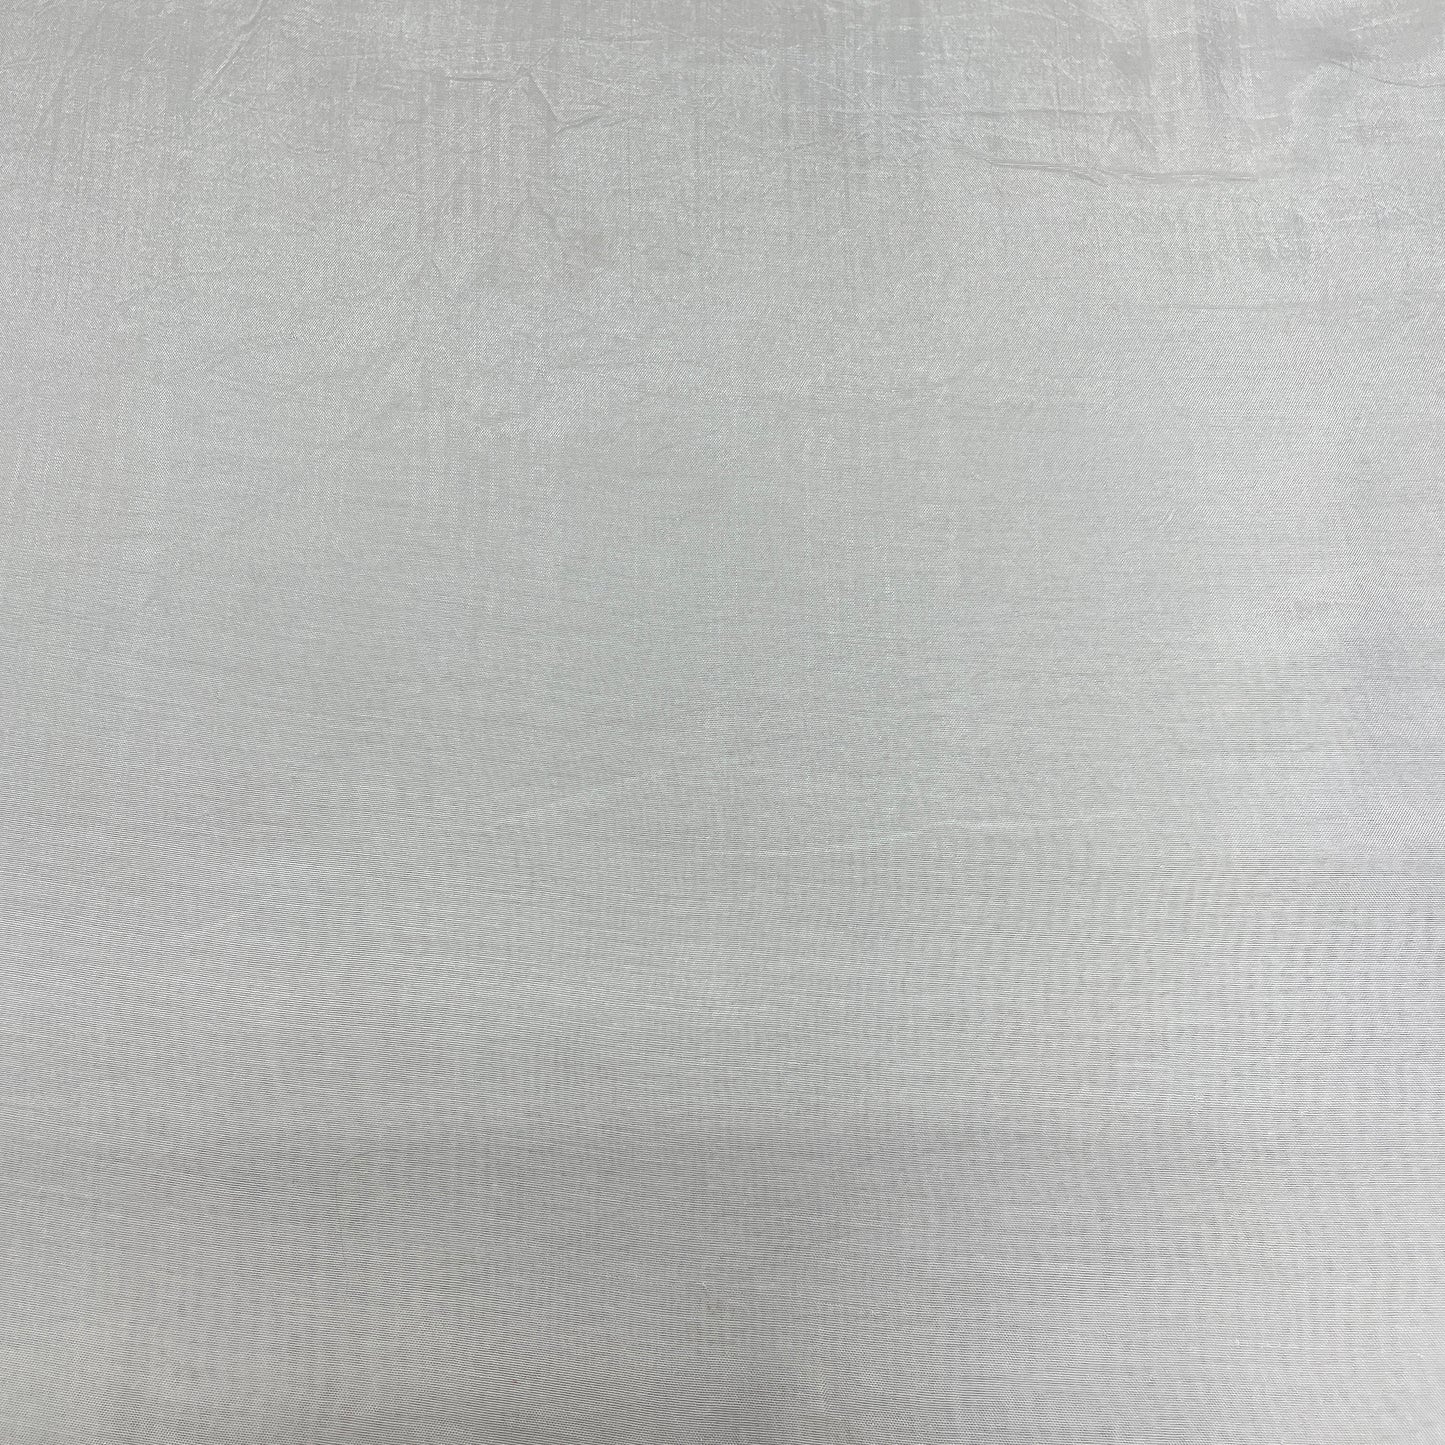 White Solid Dyeable Santoon Fabric - TradeUNO